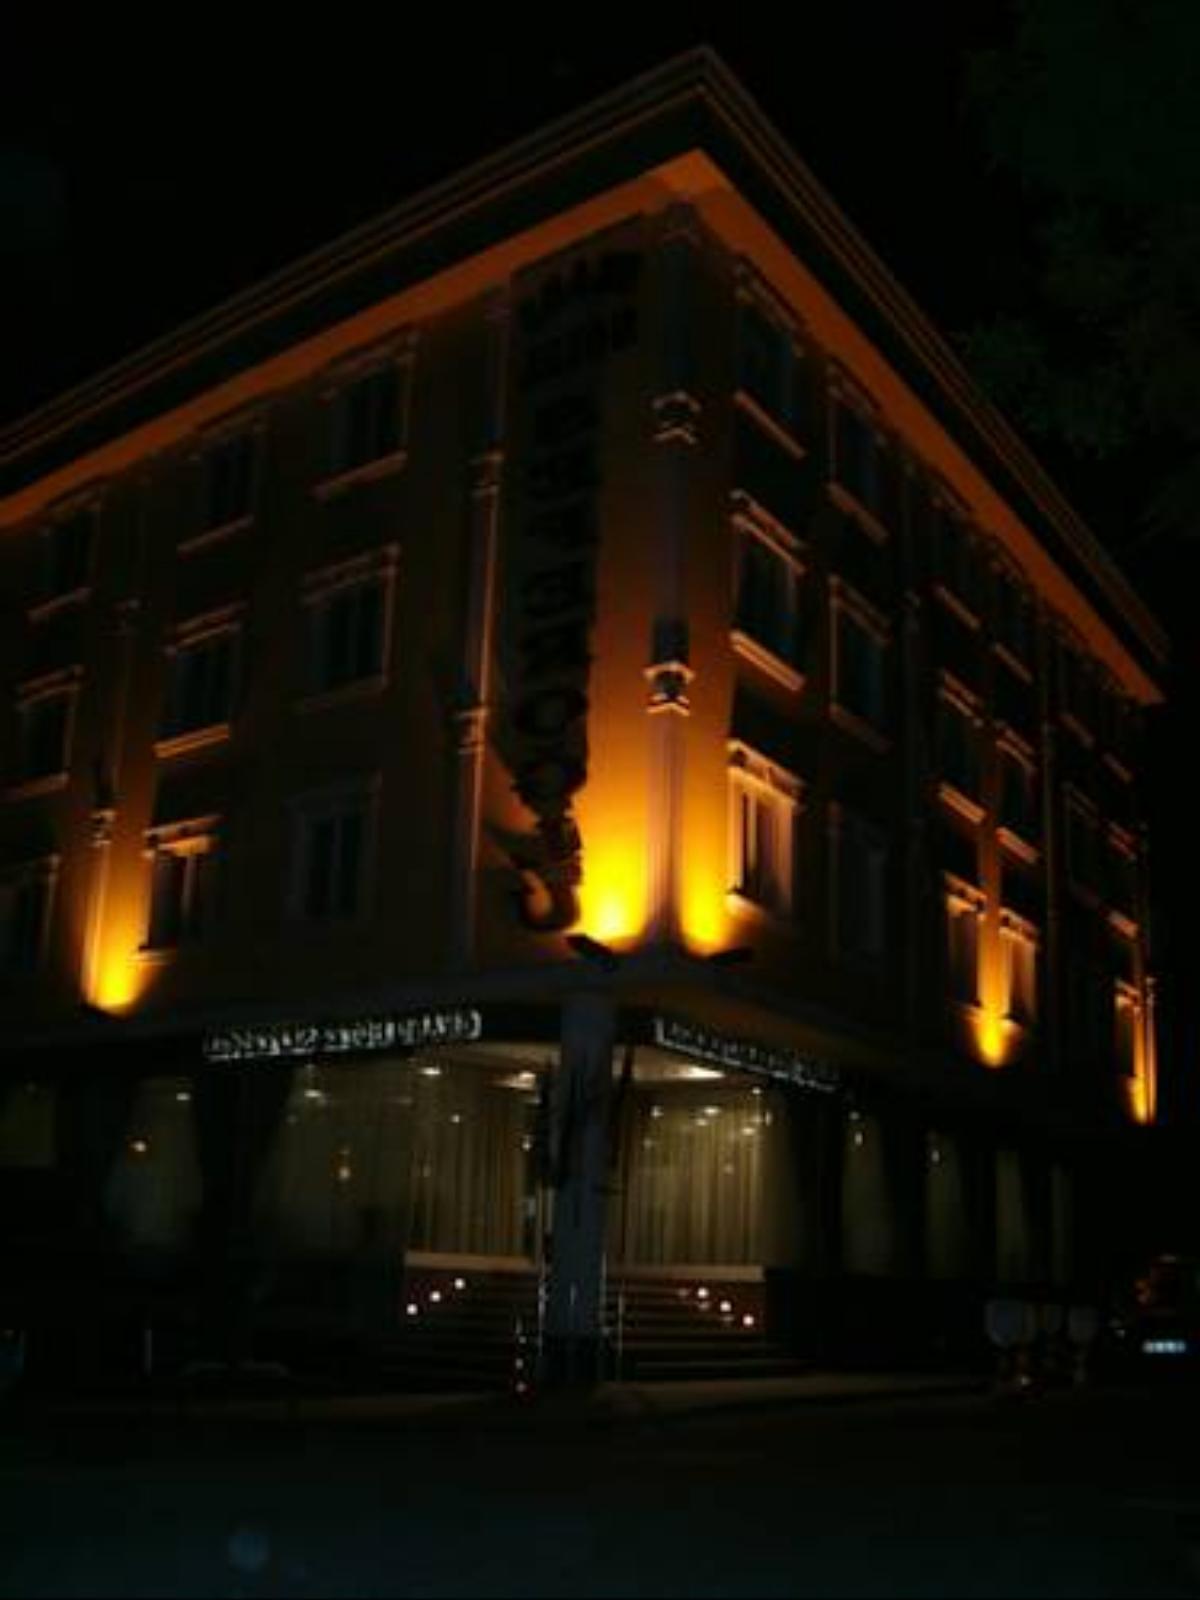 Bayrampasa Grand Hotel Seferoglu Hotel İstanbul Turkey